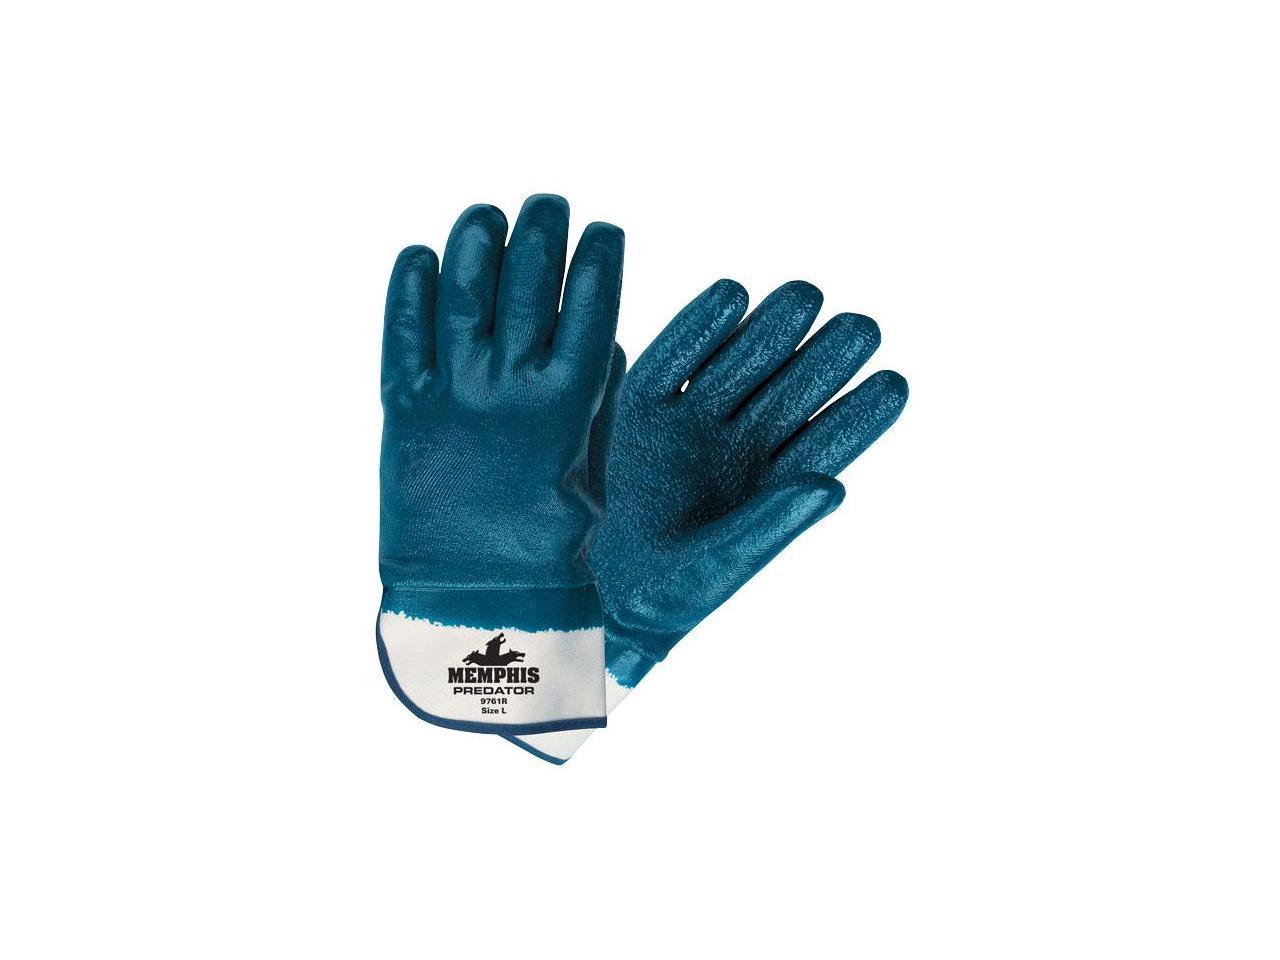 Blue/White 12 Pairs Large Predator Premium Nitrile-Coated Gloves 